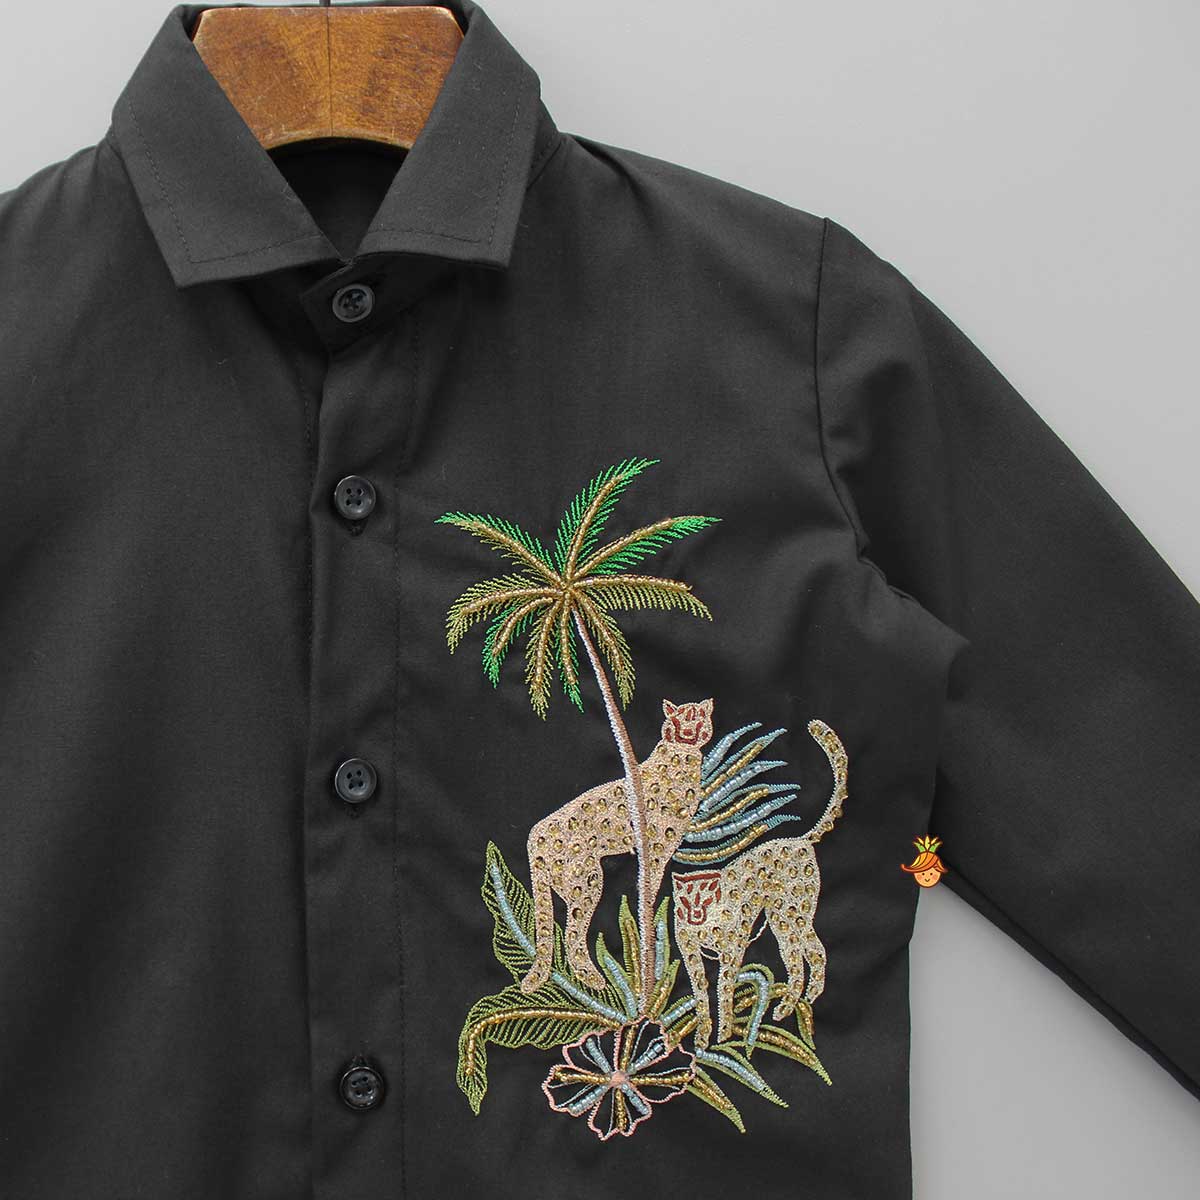 Jungle Theme Embroidered Black Shirt